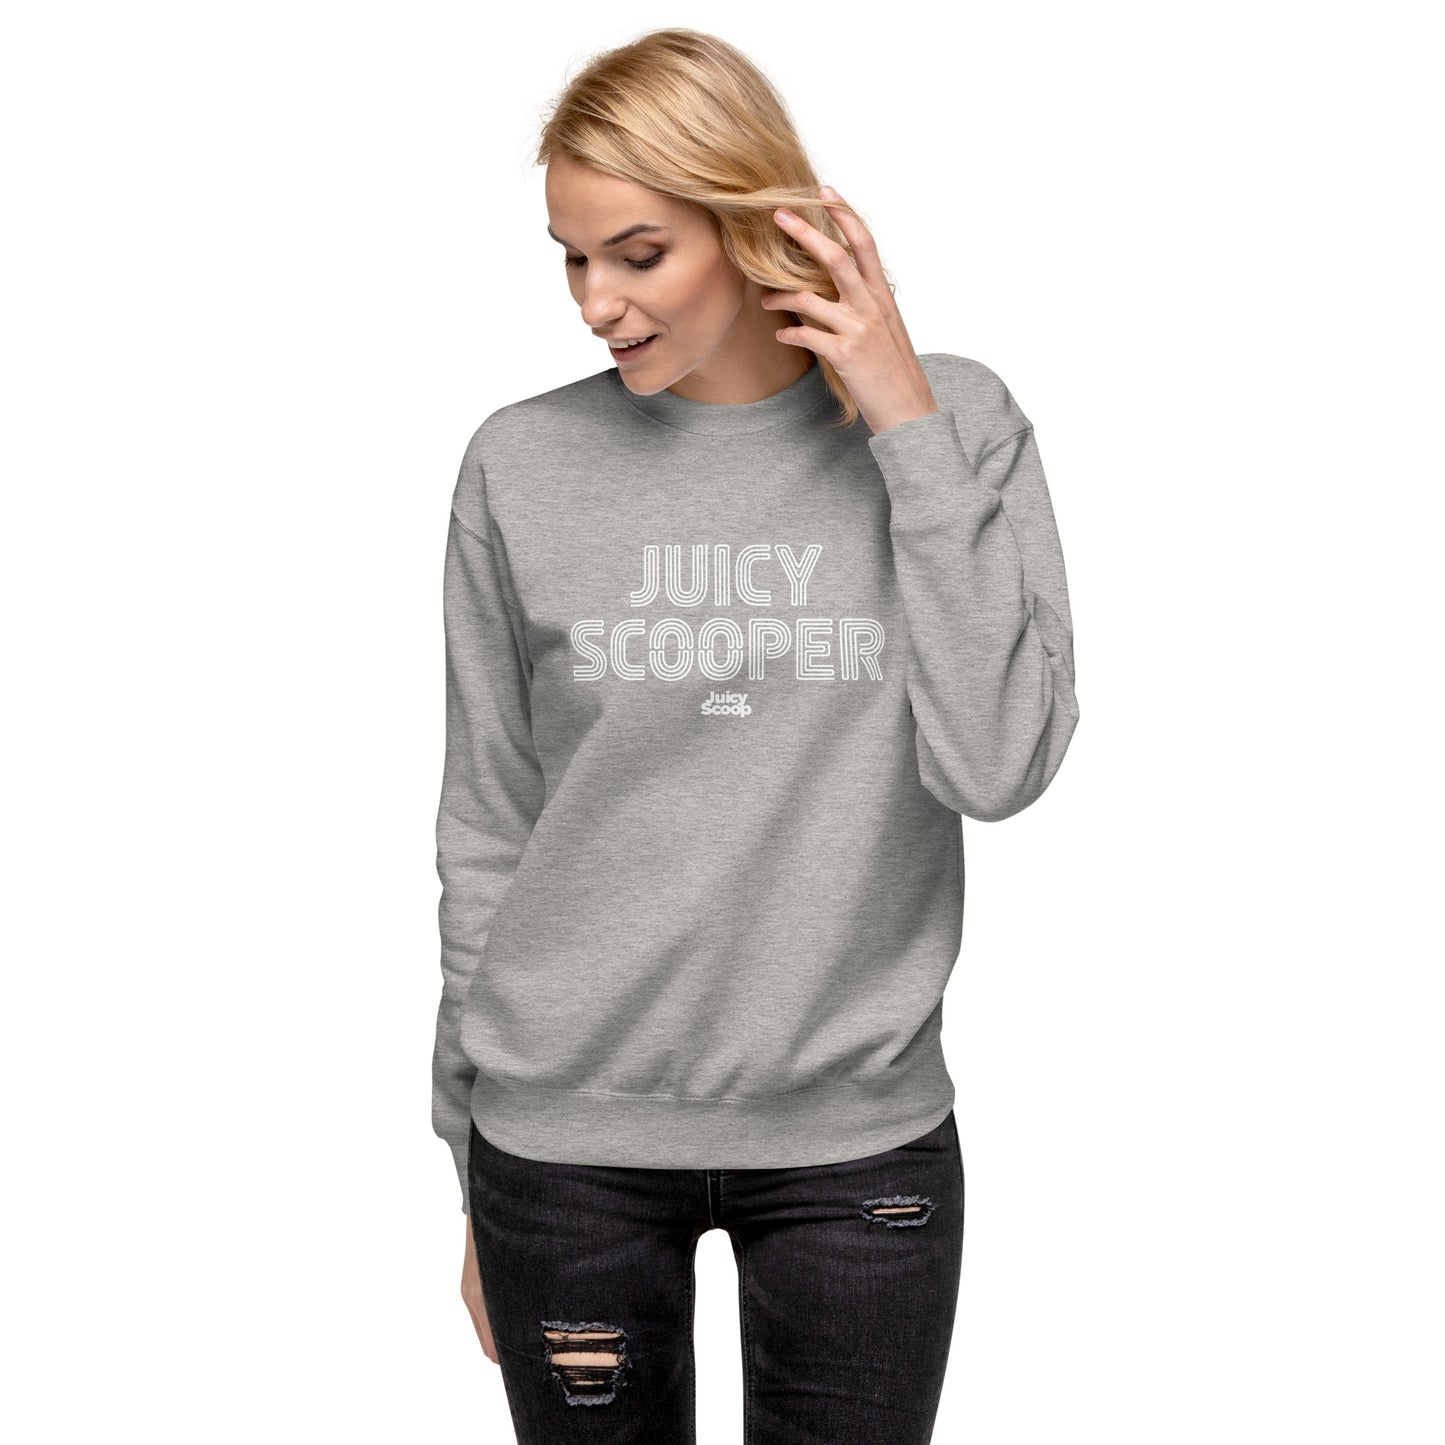 Juicy Scooper Unisex Premium Sweatshirt